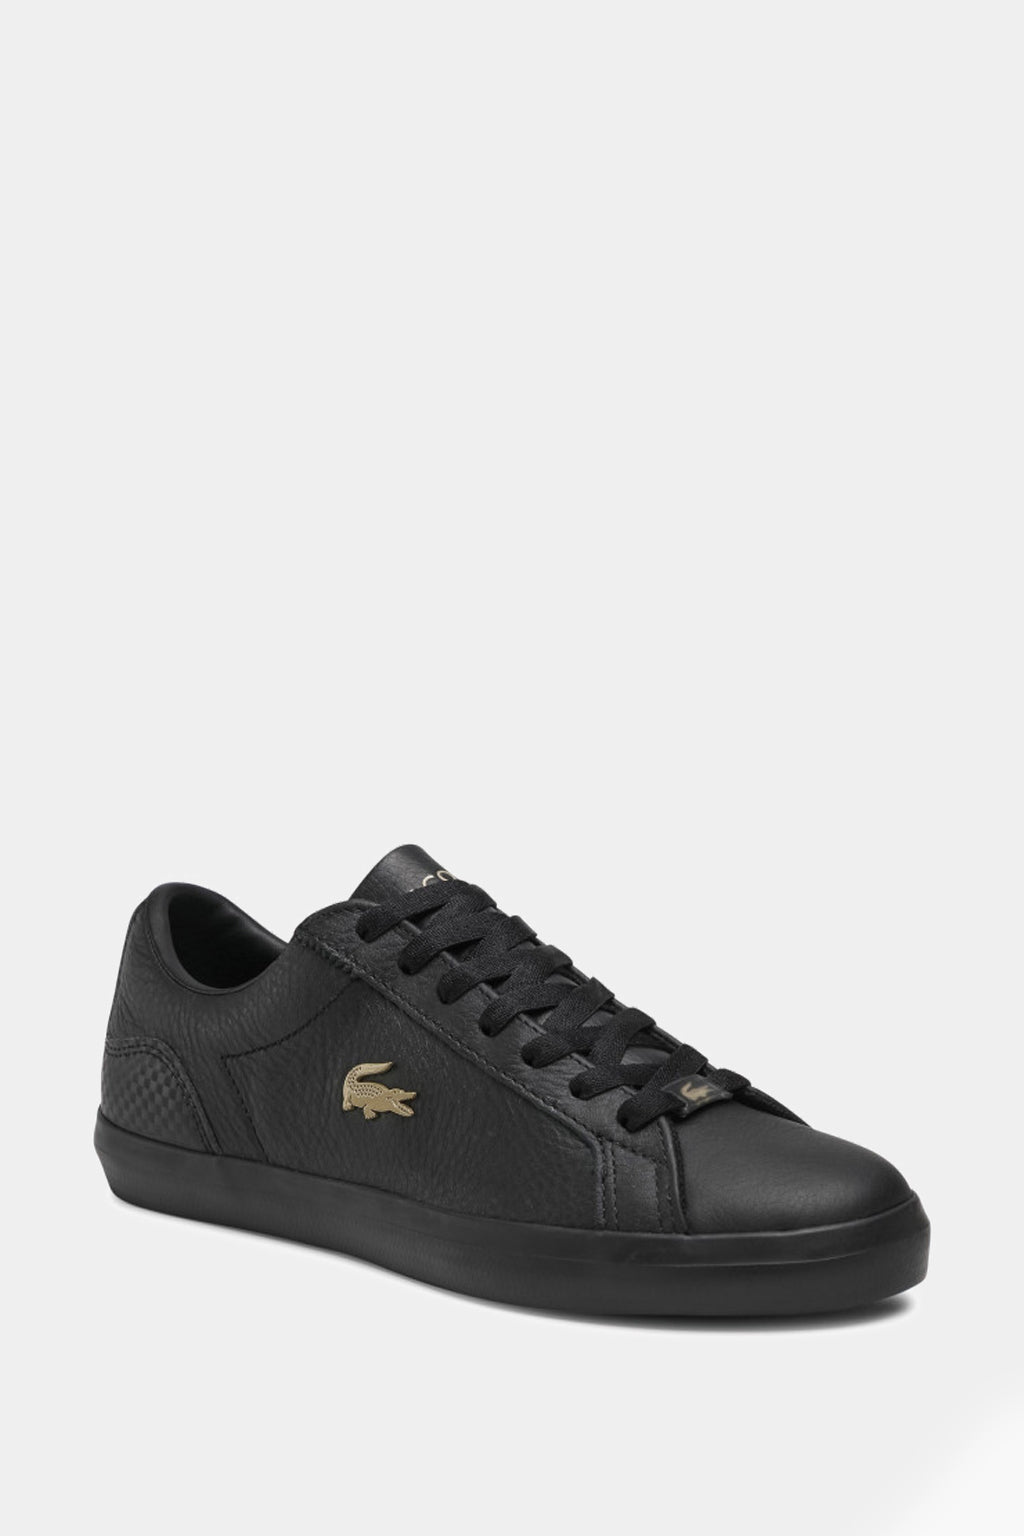 Lacoste - Men's Lerond Sneakers Black